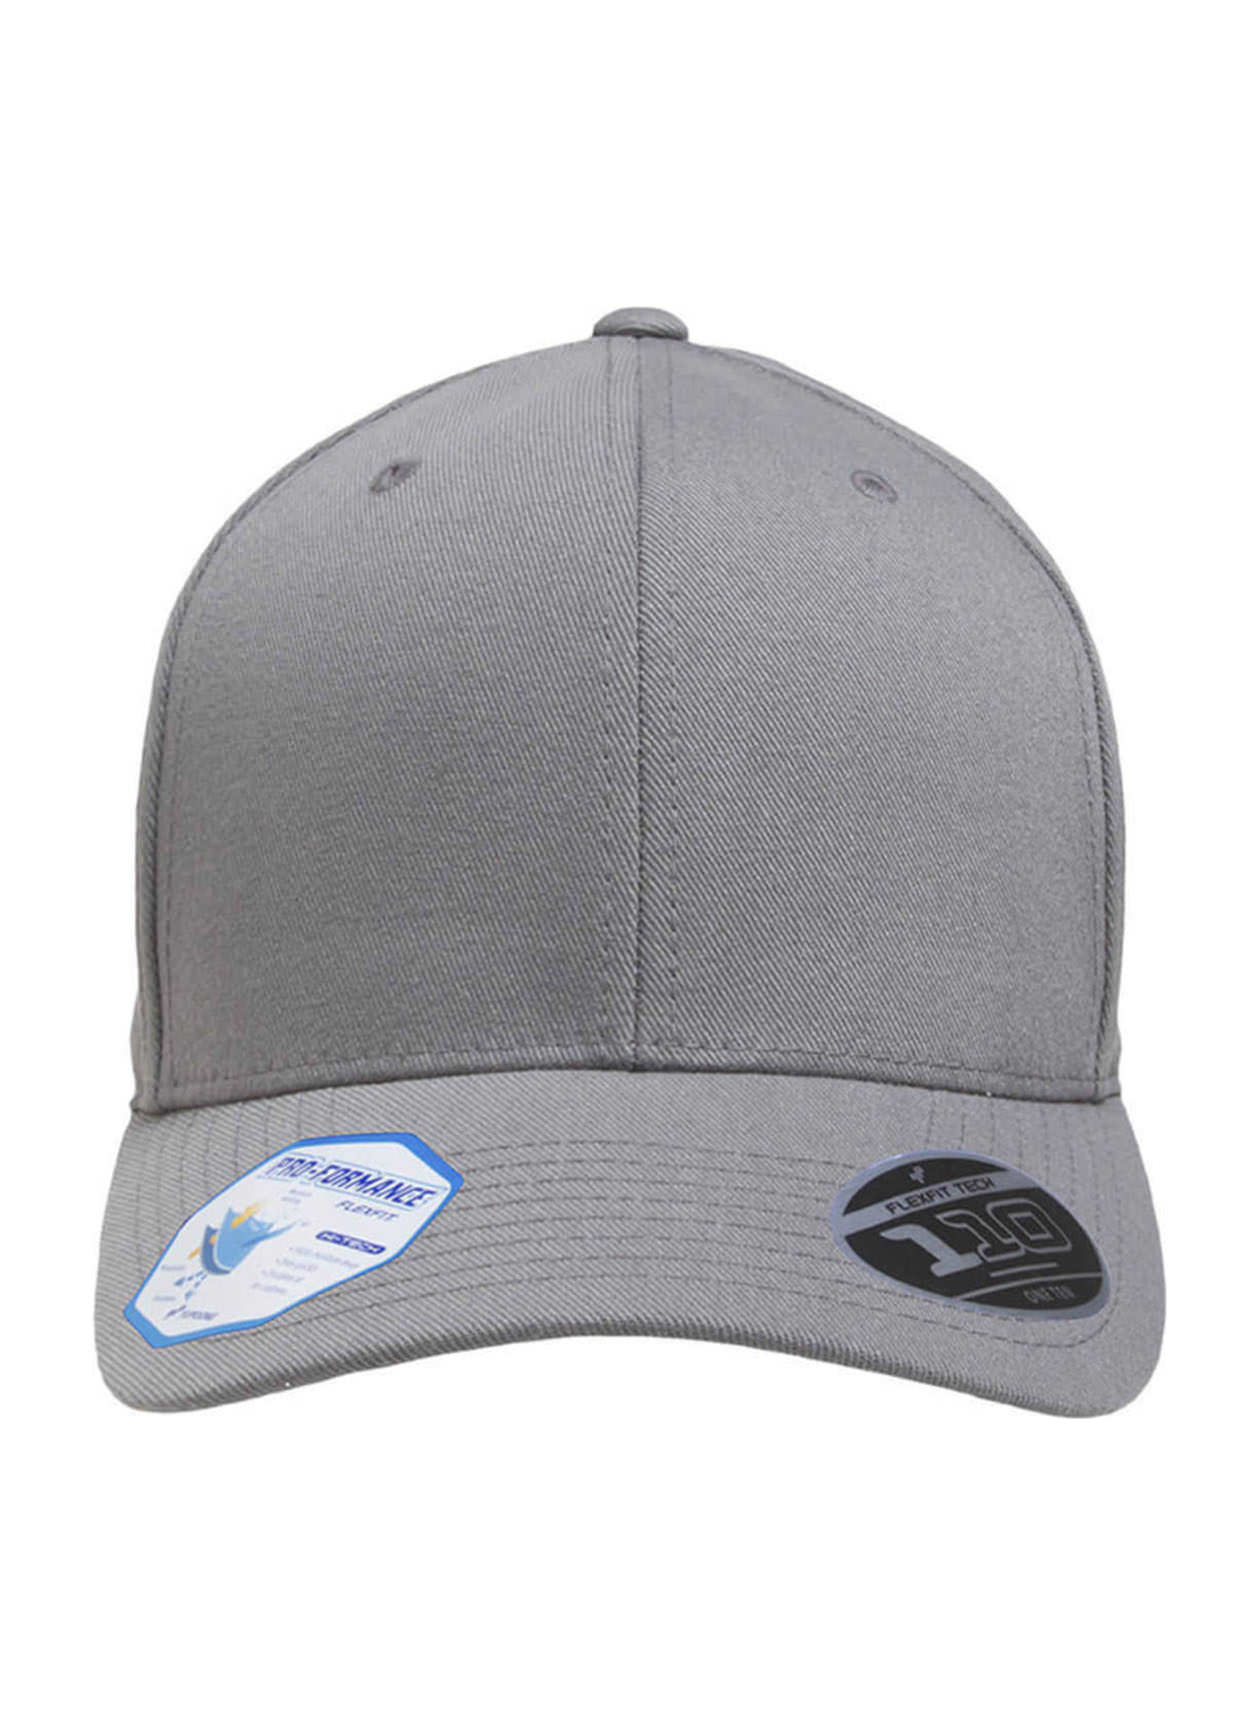 Flexfit Grey Pro-Formance Solid Hat